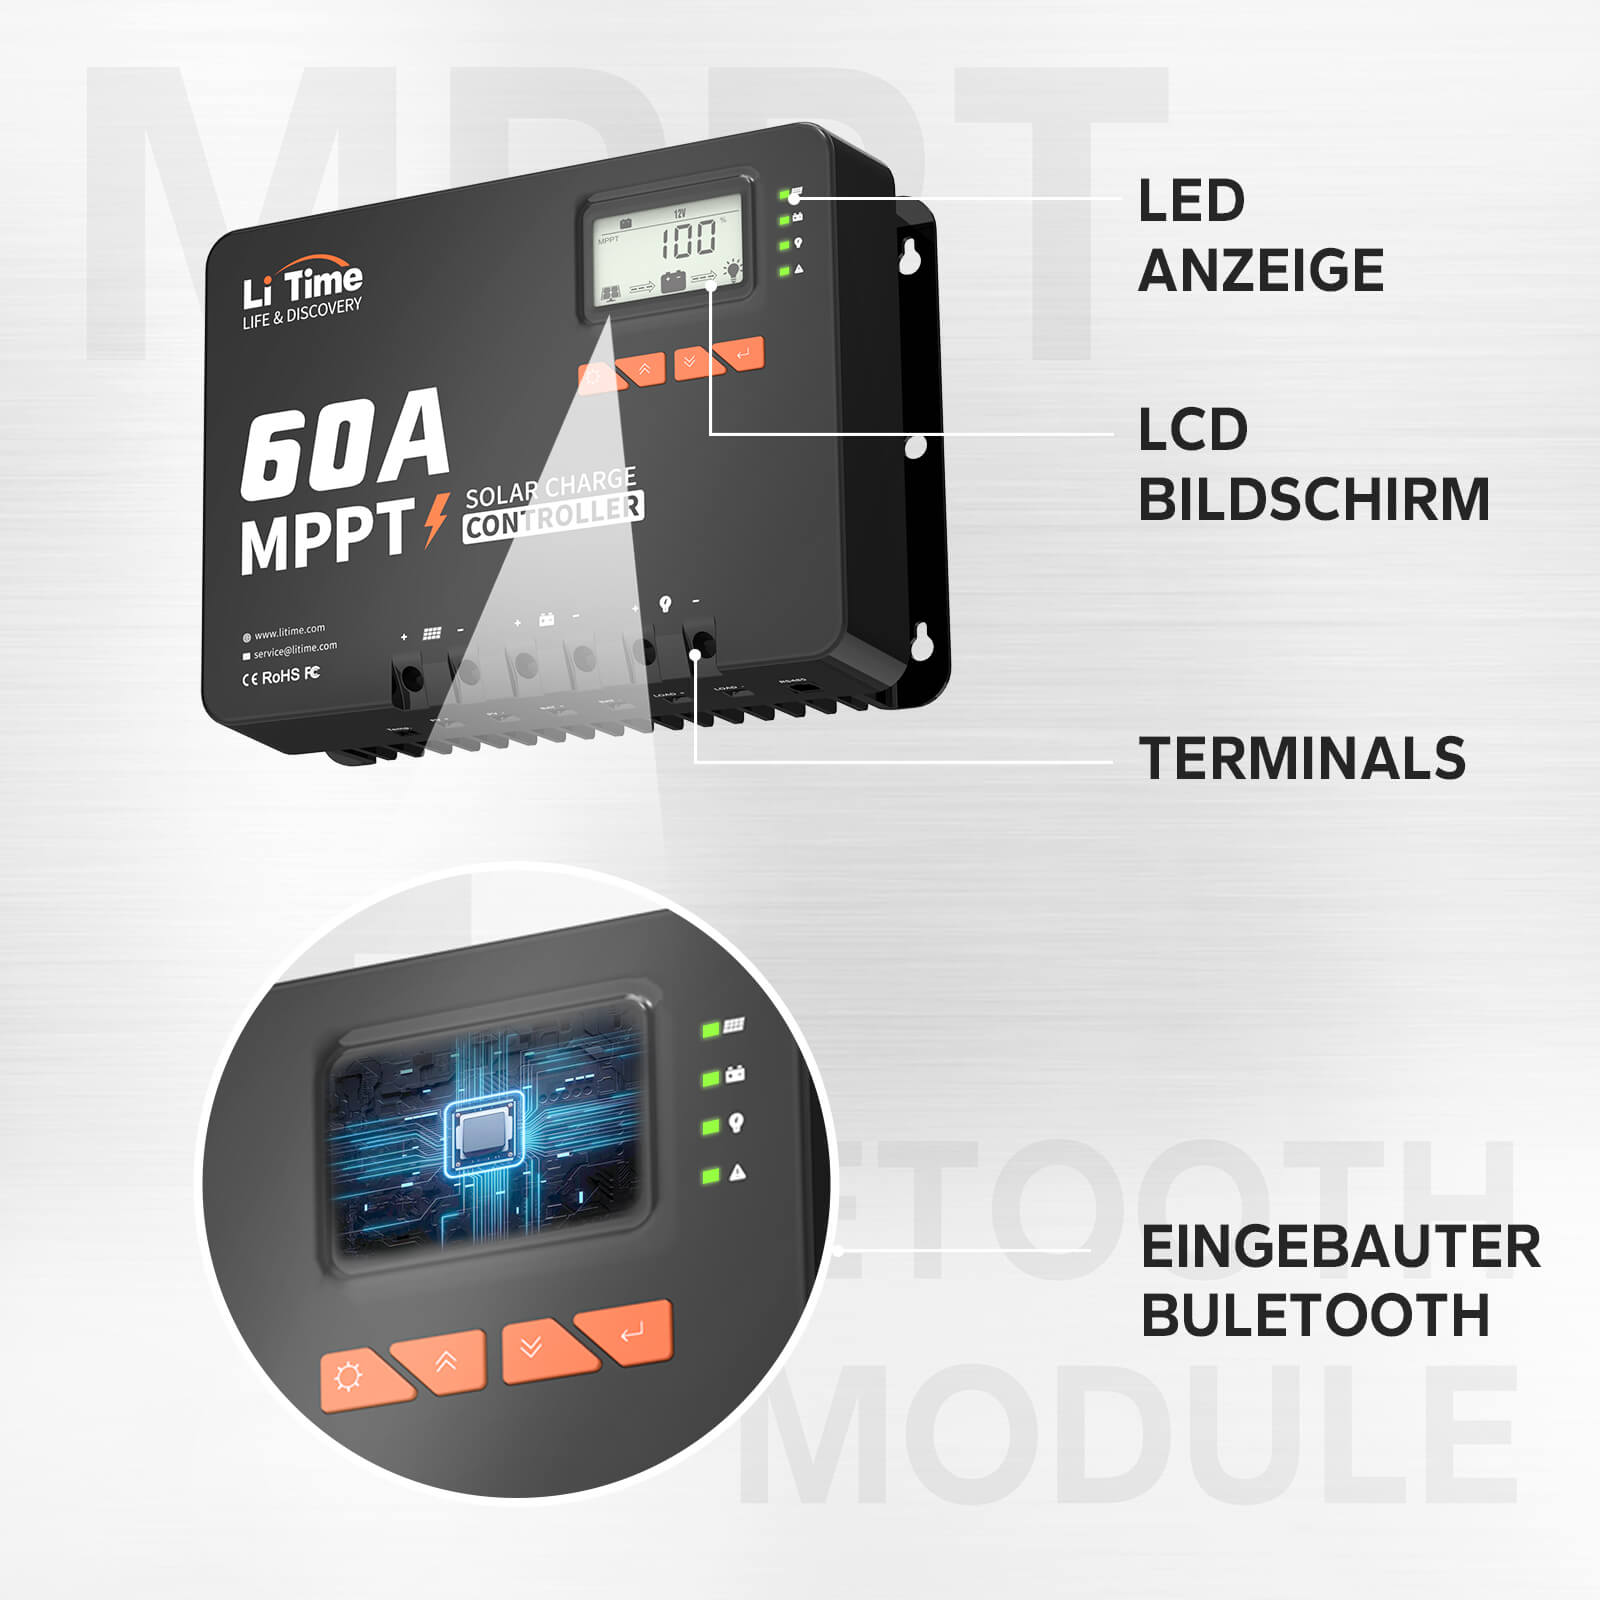 🔥Endpreis: €219,99🔥LiTime 60A MPPT 12V/24V/36V/48V Auto DC Input Solarladeregler mit Bluetooth Adapter